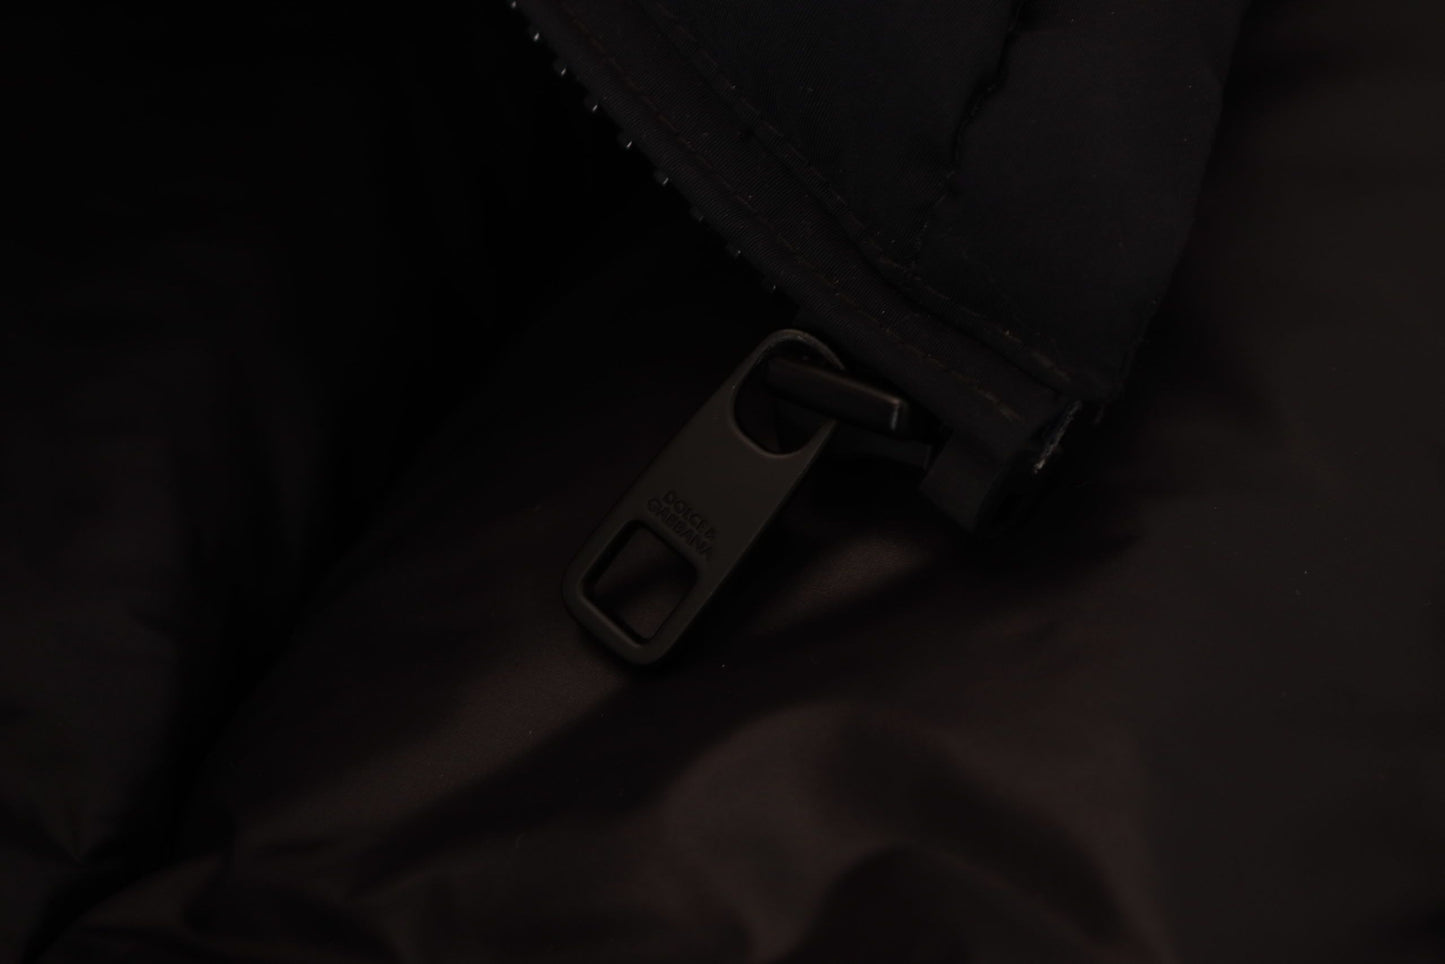 Dolce & Gabbana Sleek Black Hooded Short Sleeve Jacket